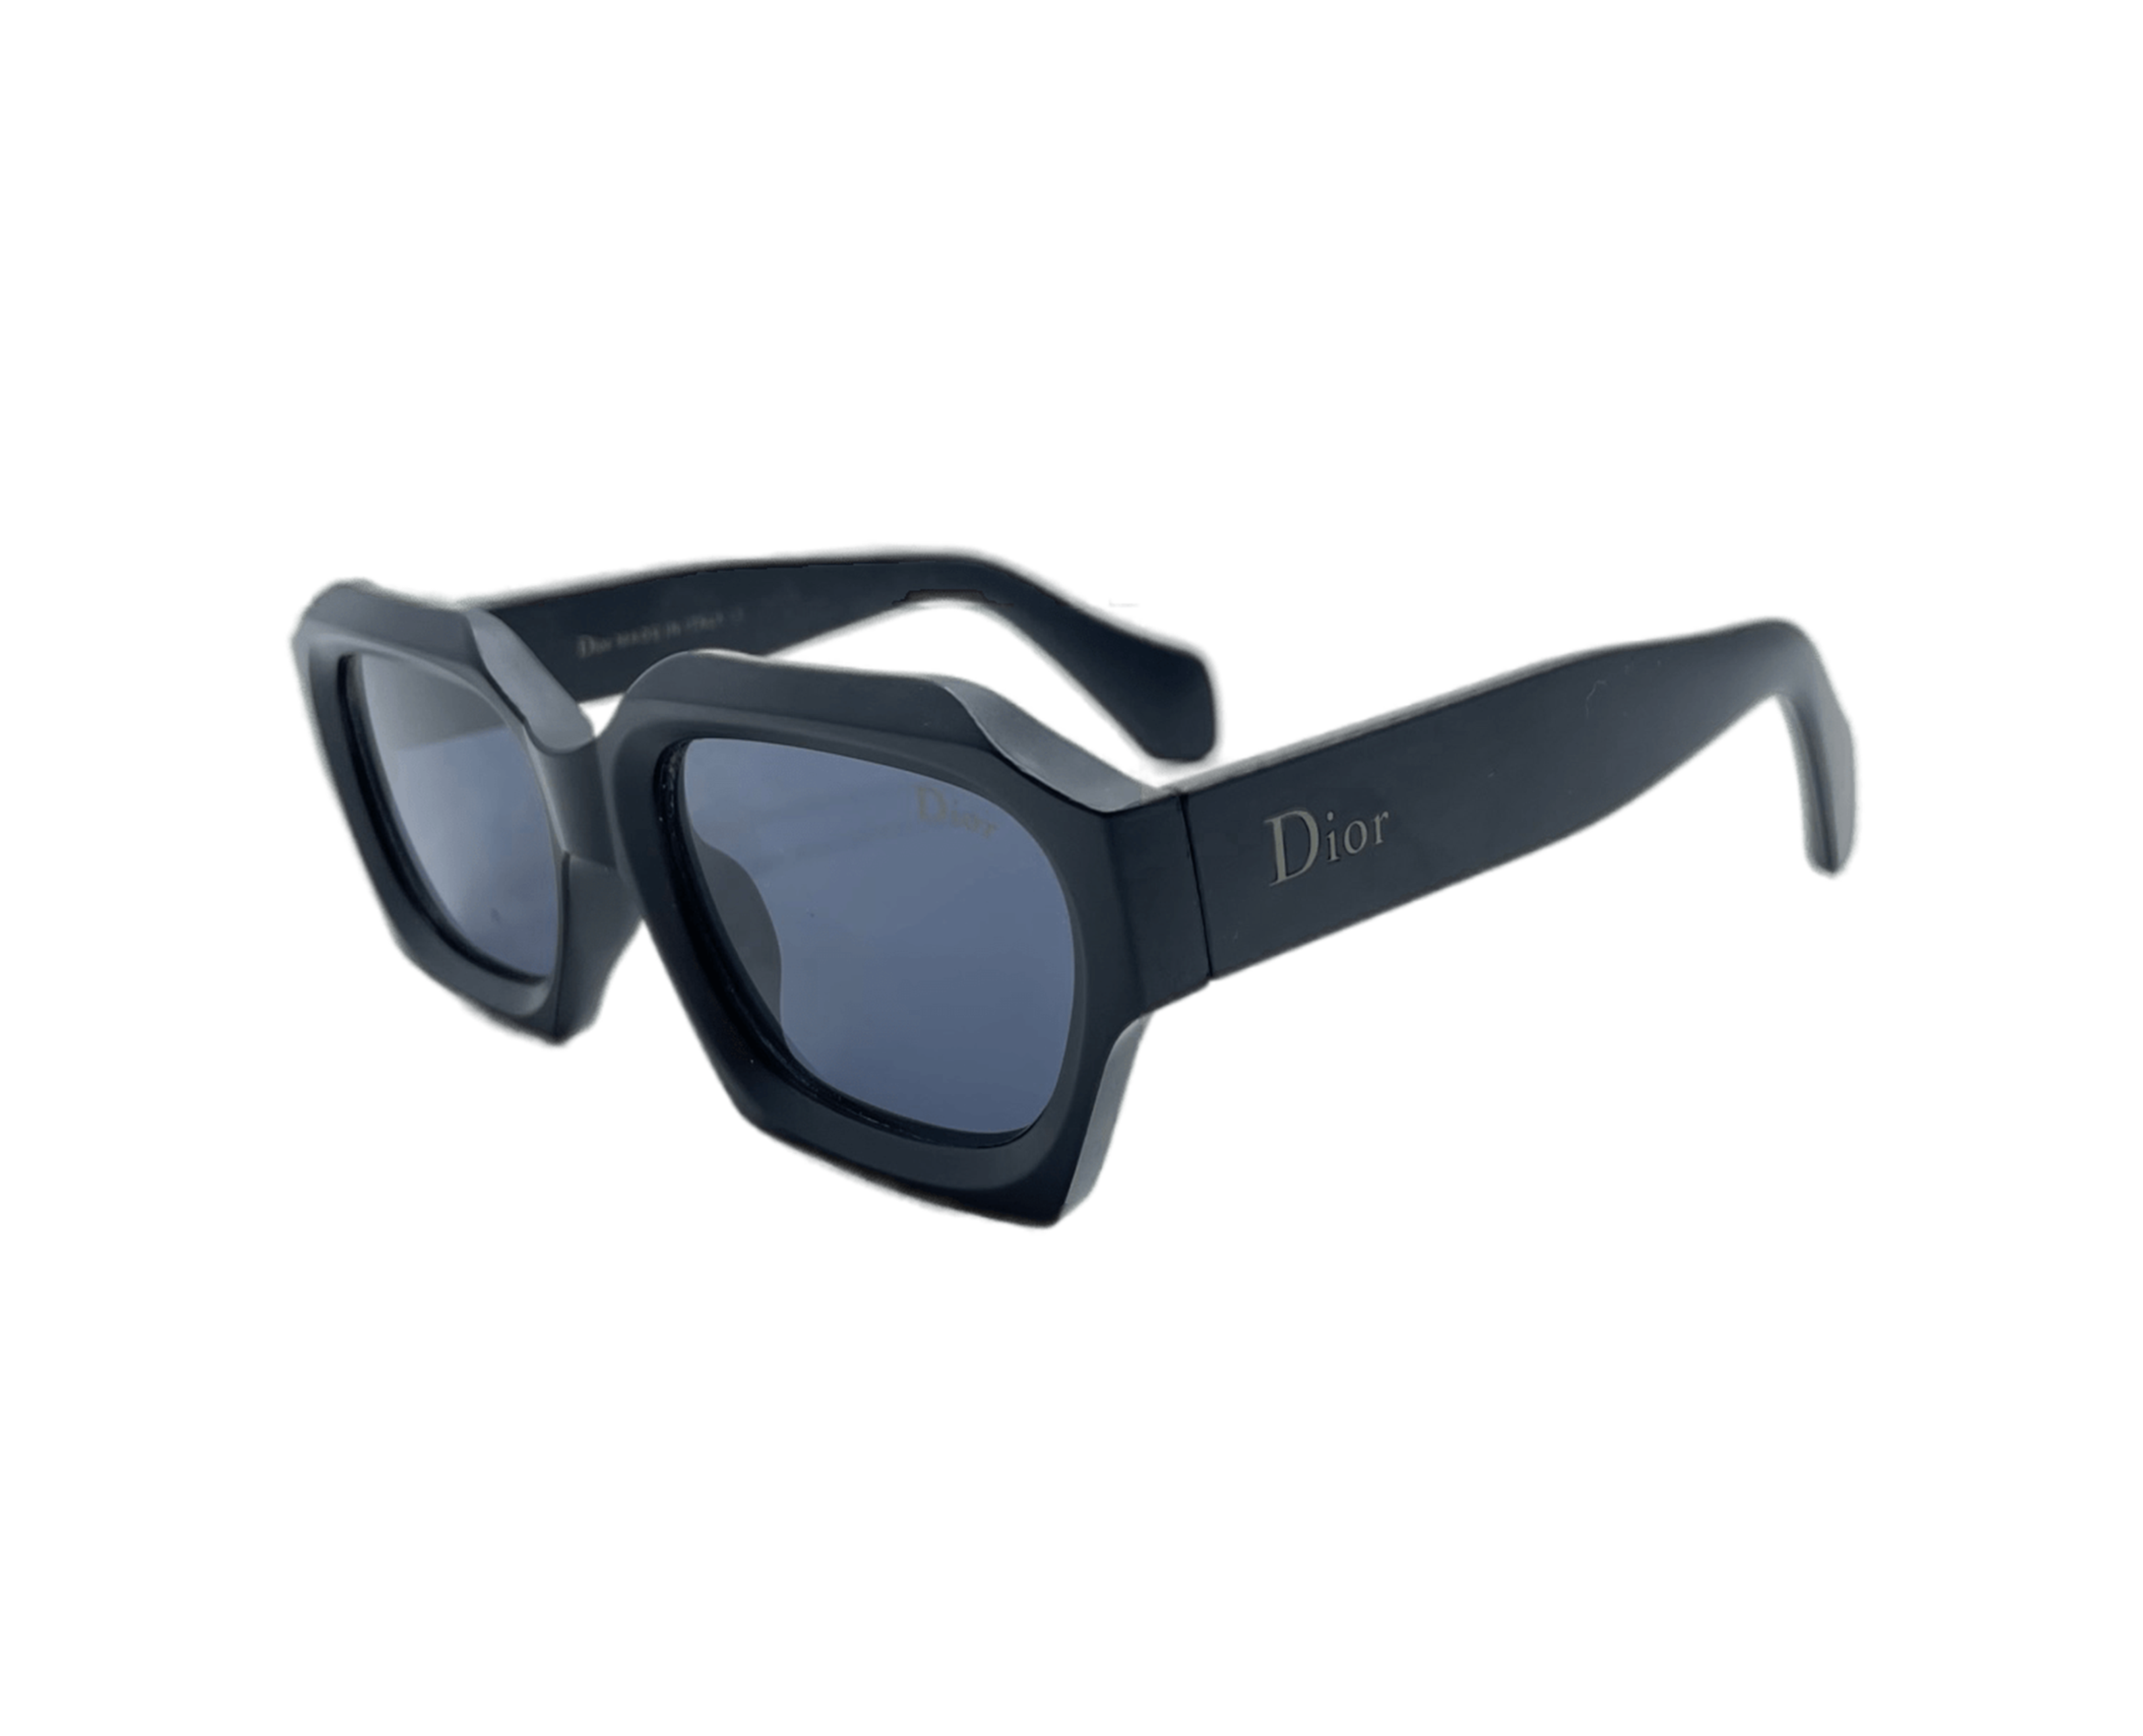 NS Deluxe - 3658 - Black - Sunglasses